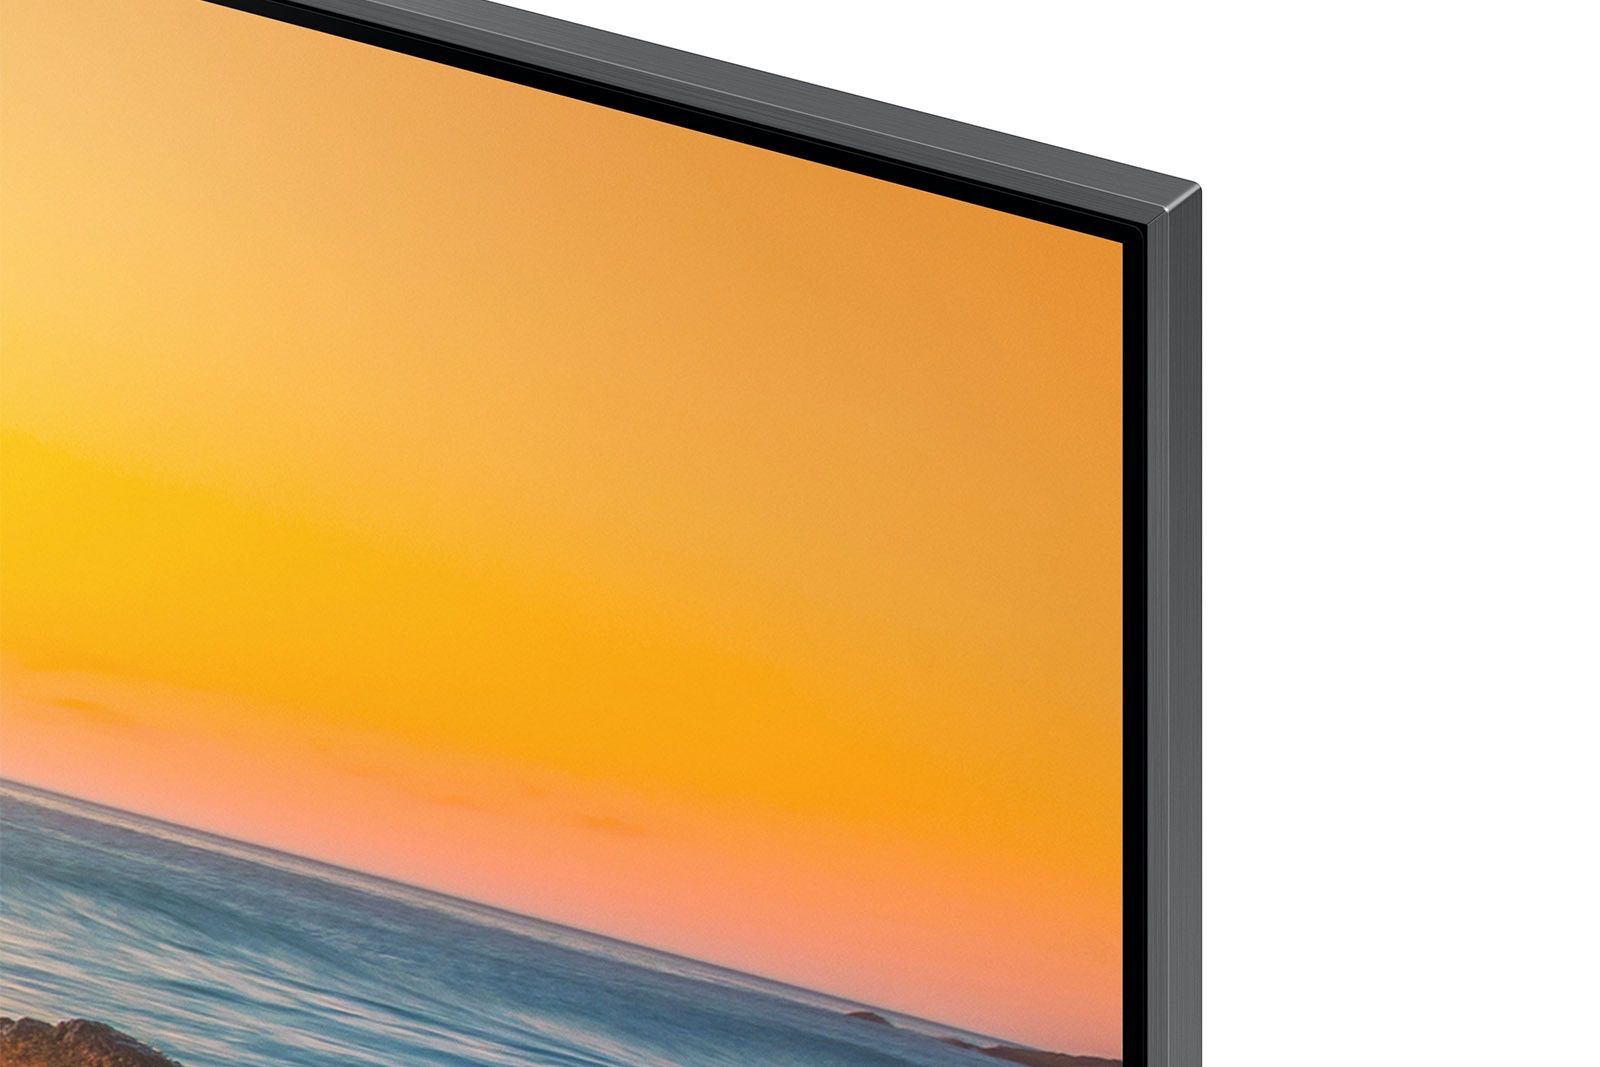 Samsung Q85R 4K TV image 8